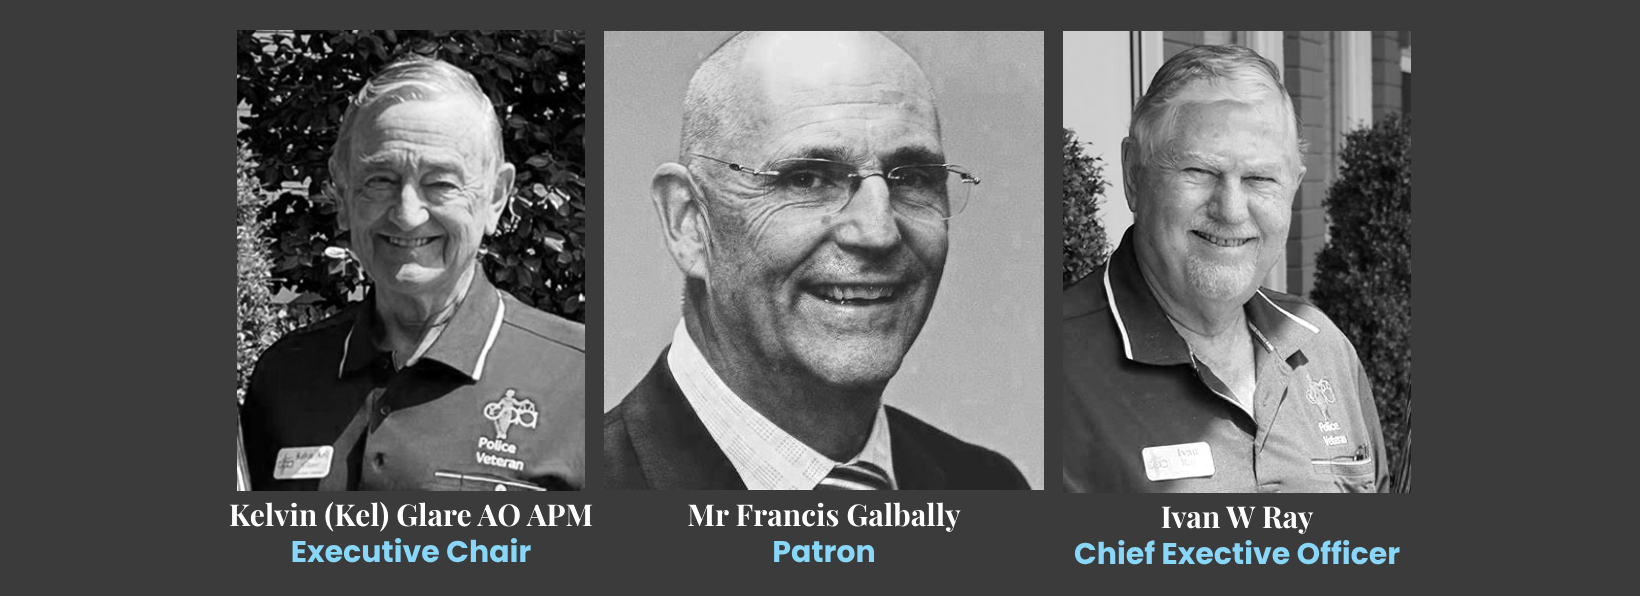 Image depicting 3 headshot portraits of Kel Glare, Francis Galbally and Ivan Ray